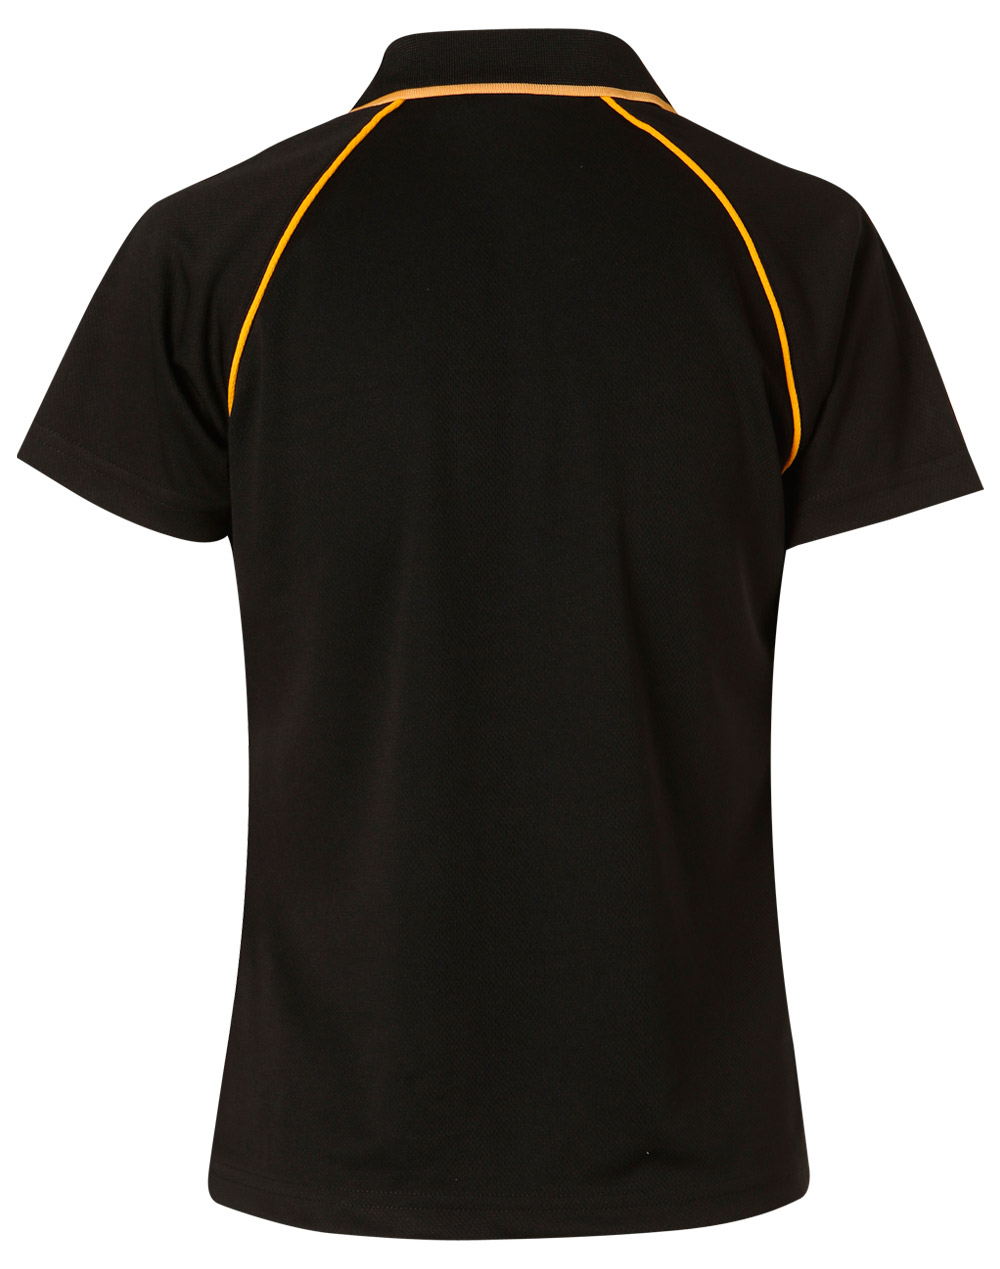 Custom Men's (Black, Gold) Champion Raglan Polo Shirts Online Perth Australia